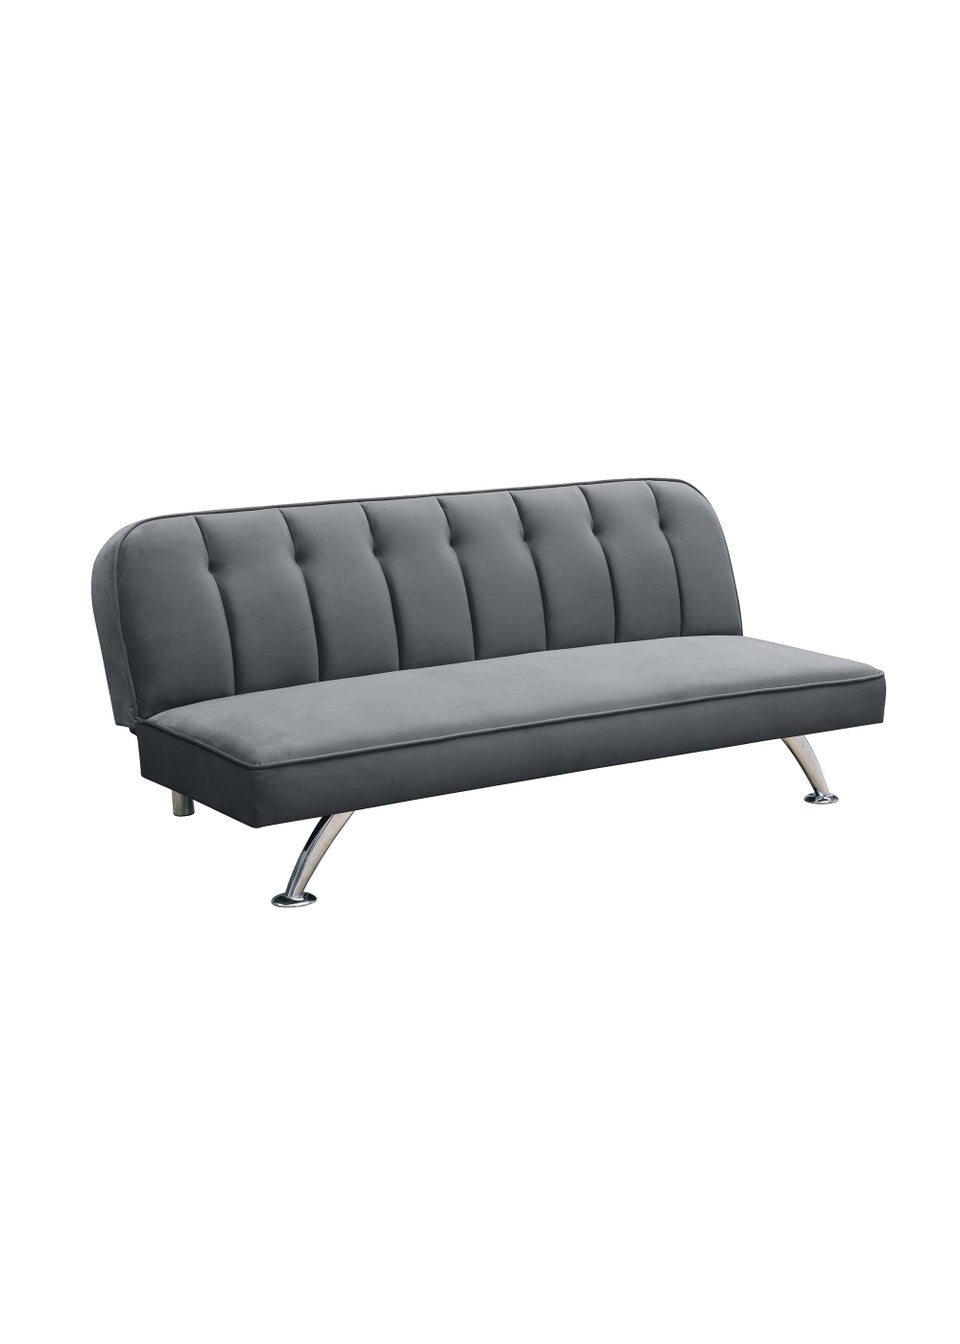 LPD Furniture Brighton Grey Sofa Bed